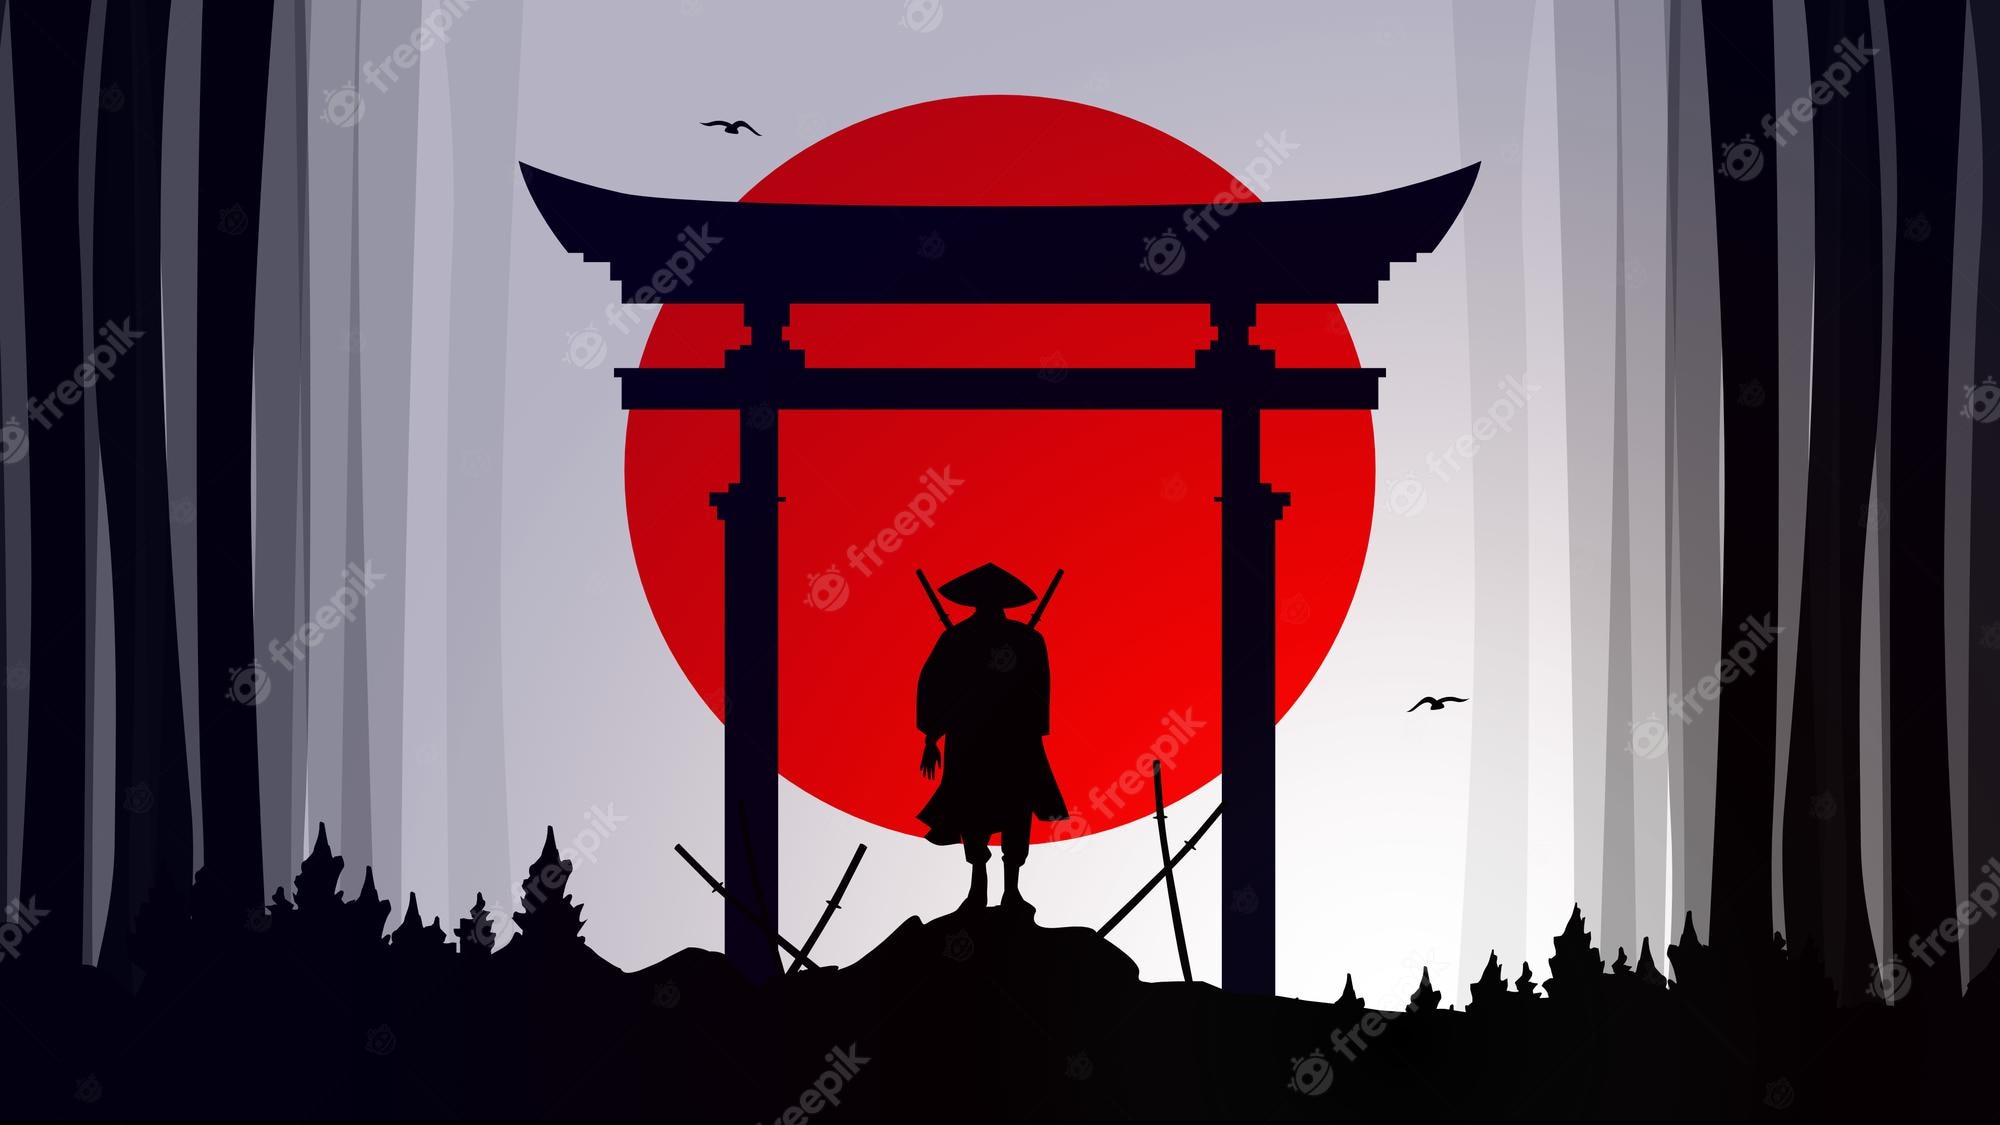 samurai wallpaper